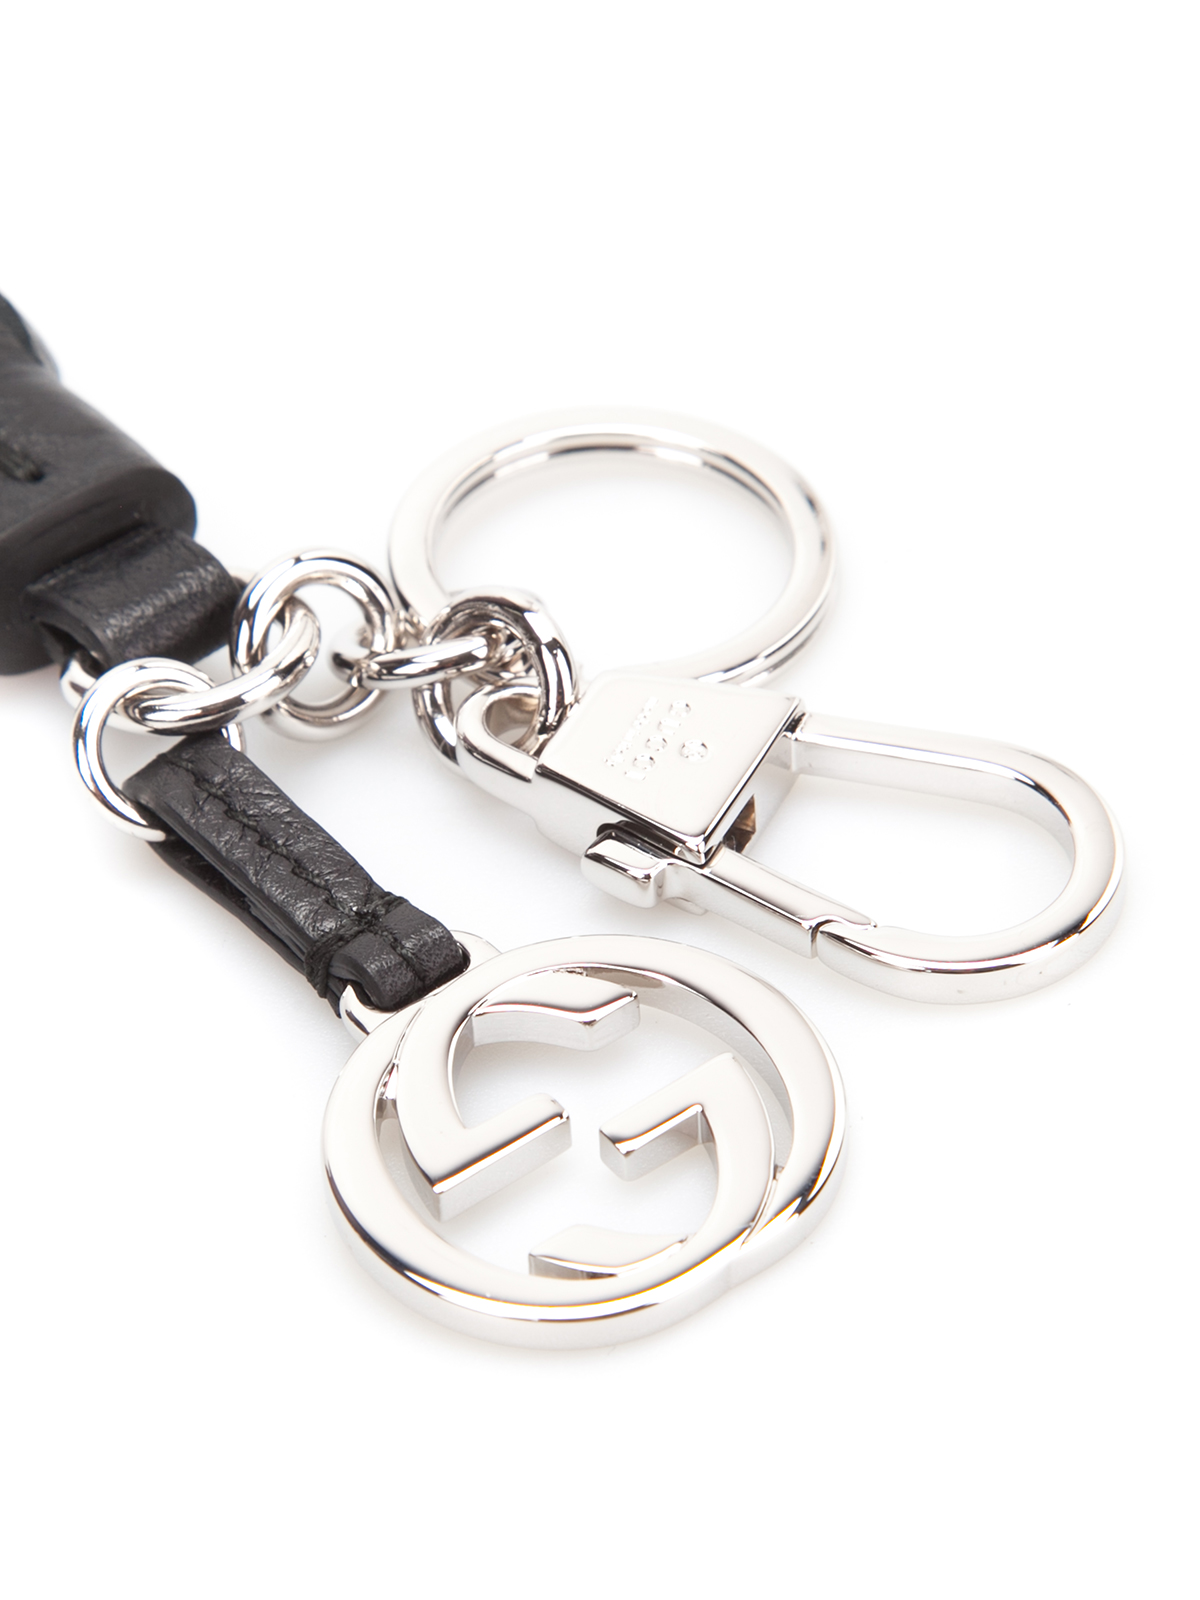 gucci key chain holder